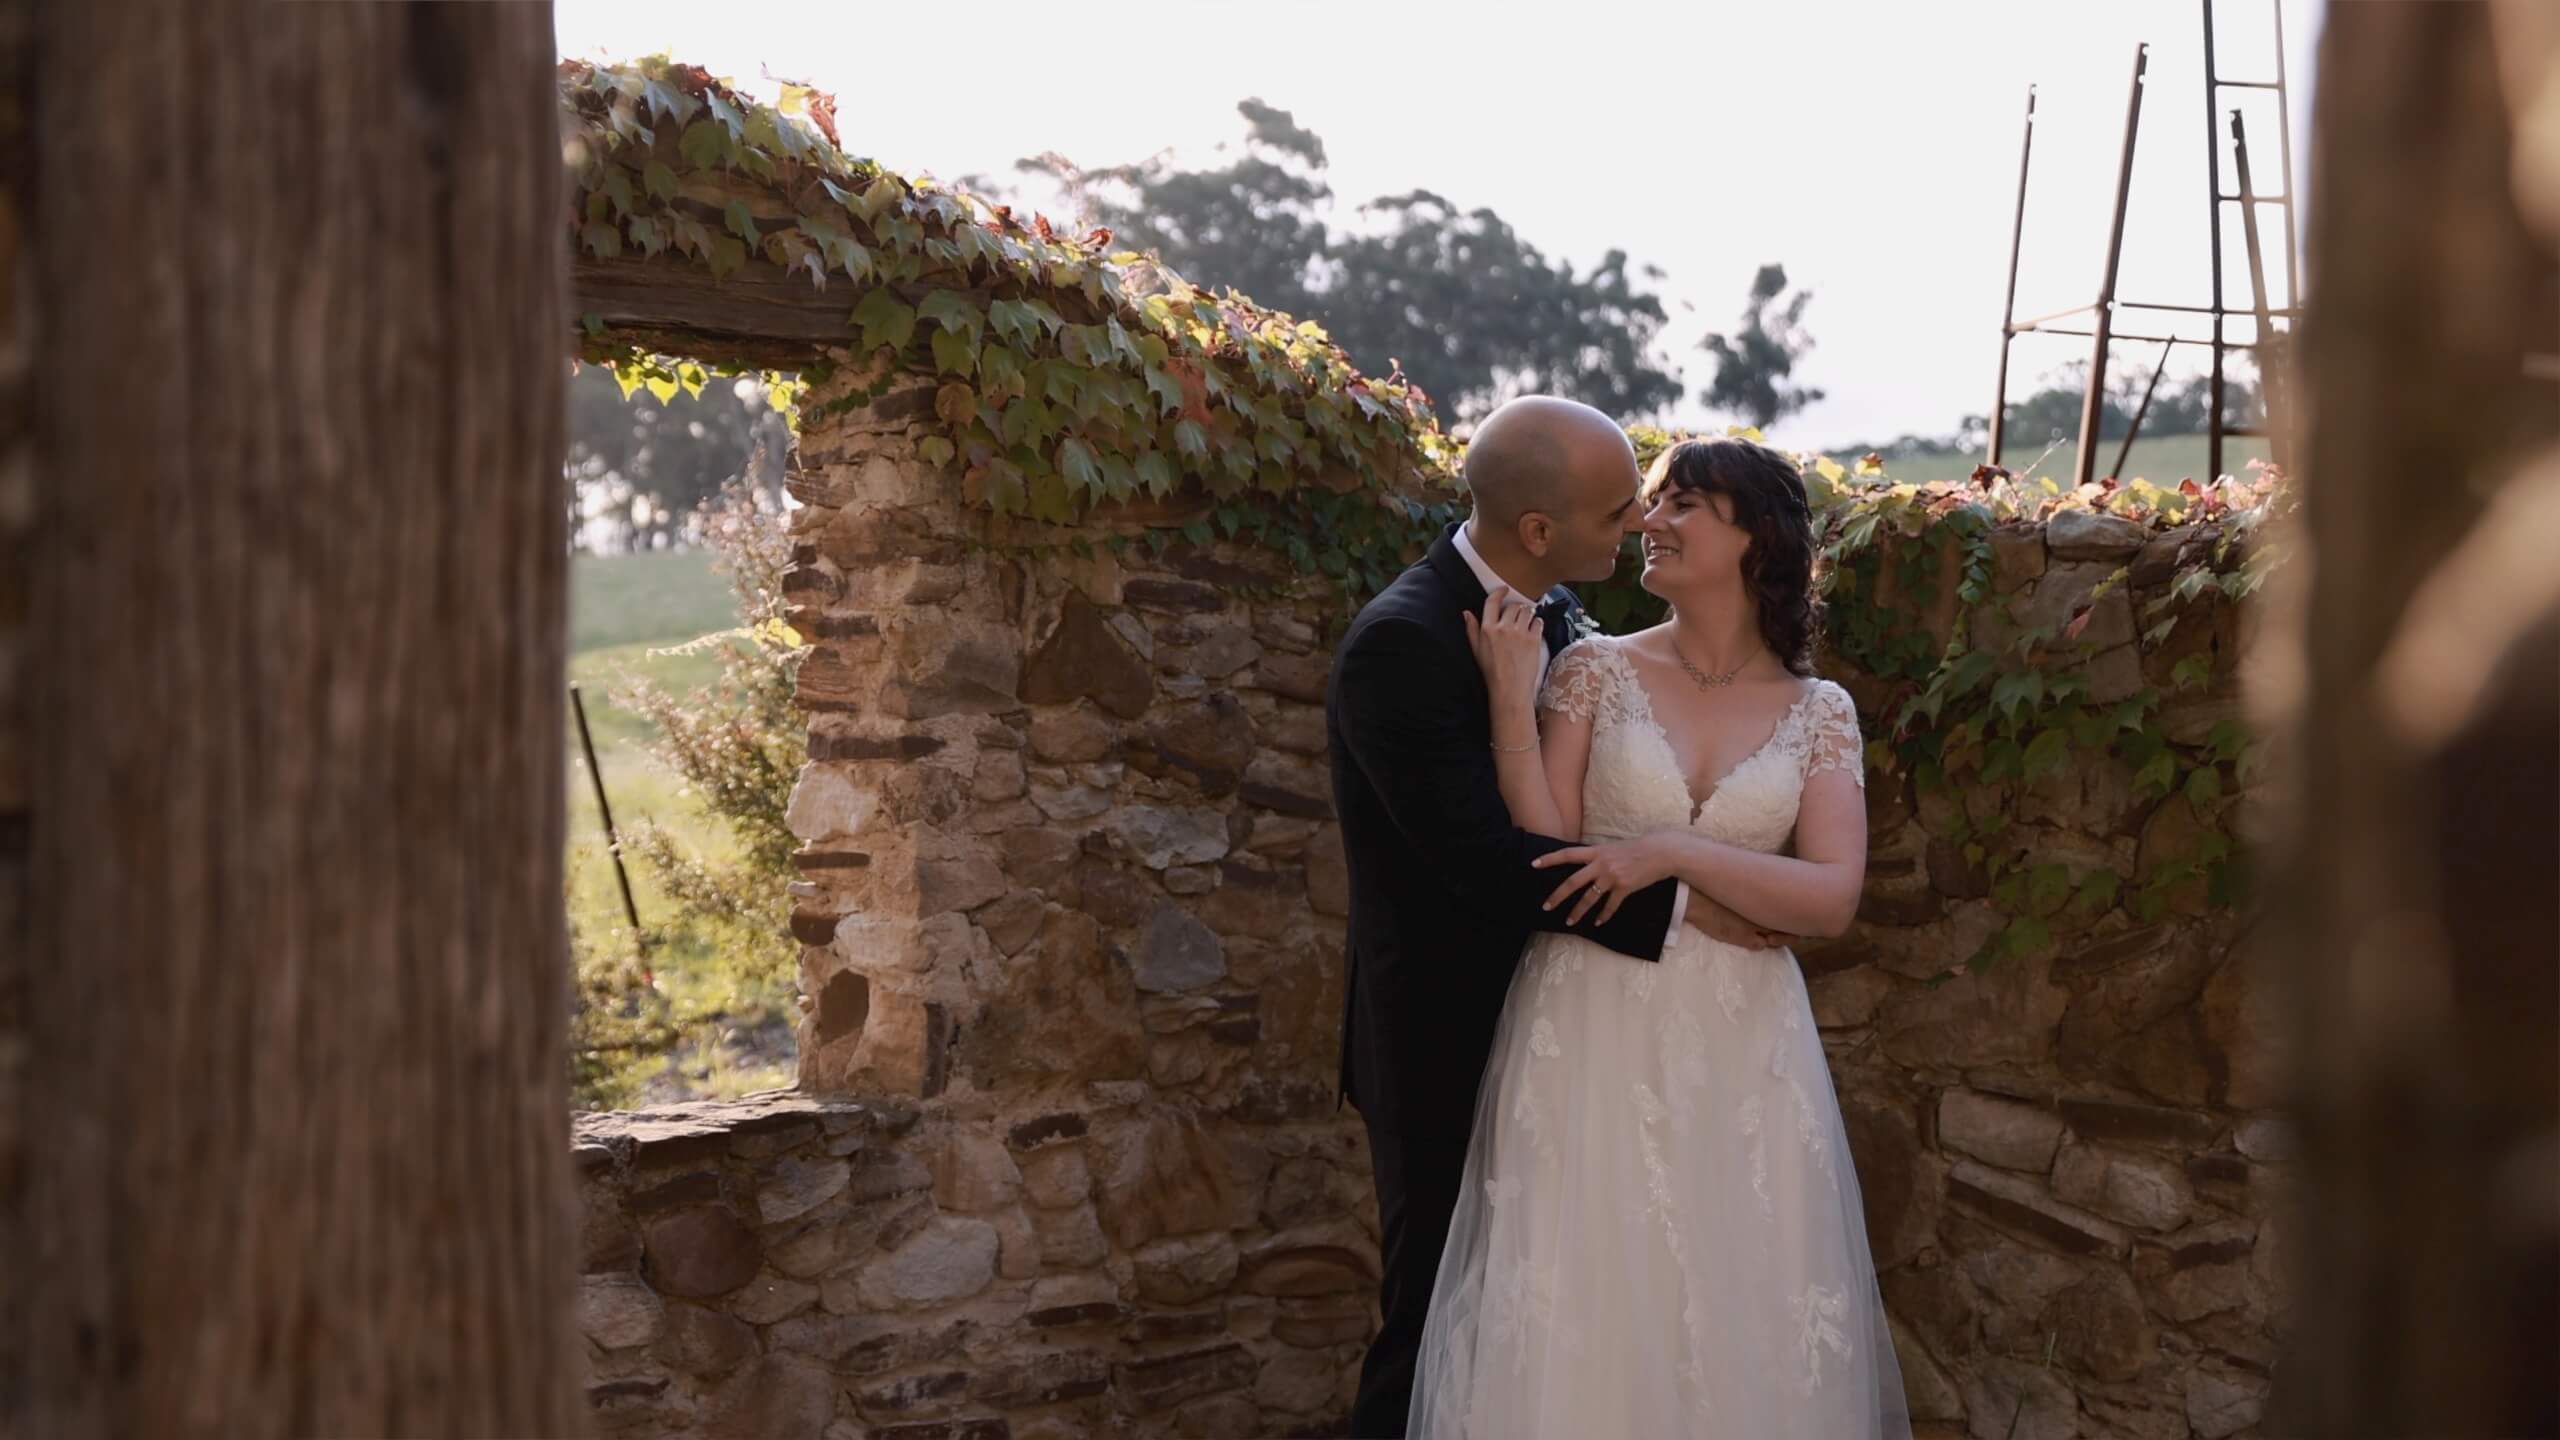 Fiona + Luke Short Film // Mali Brae Farm // Southern Highlands Wedding Videography